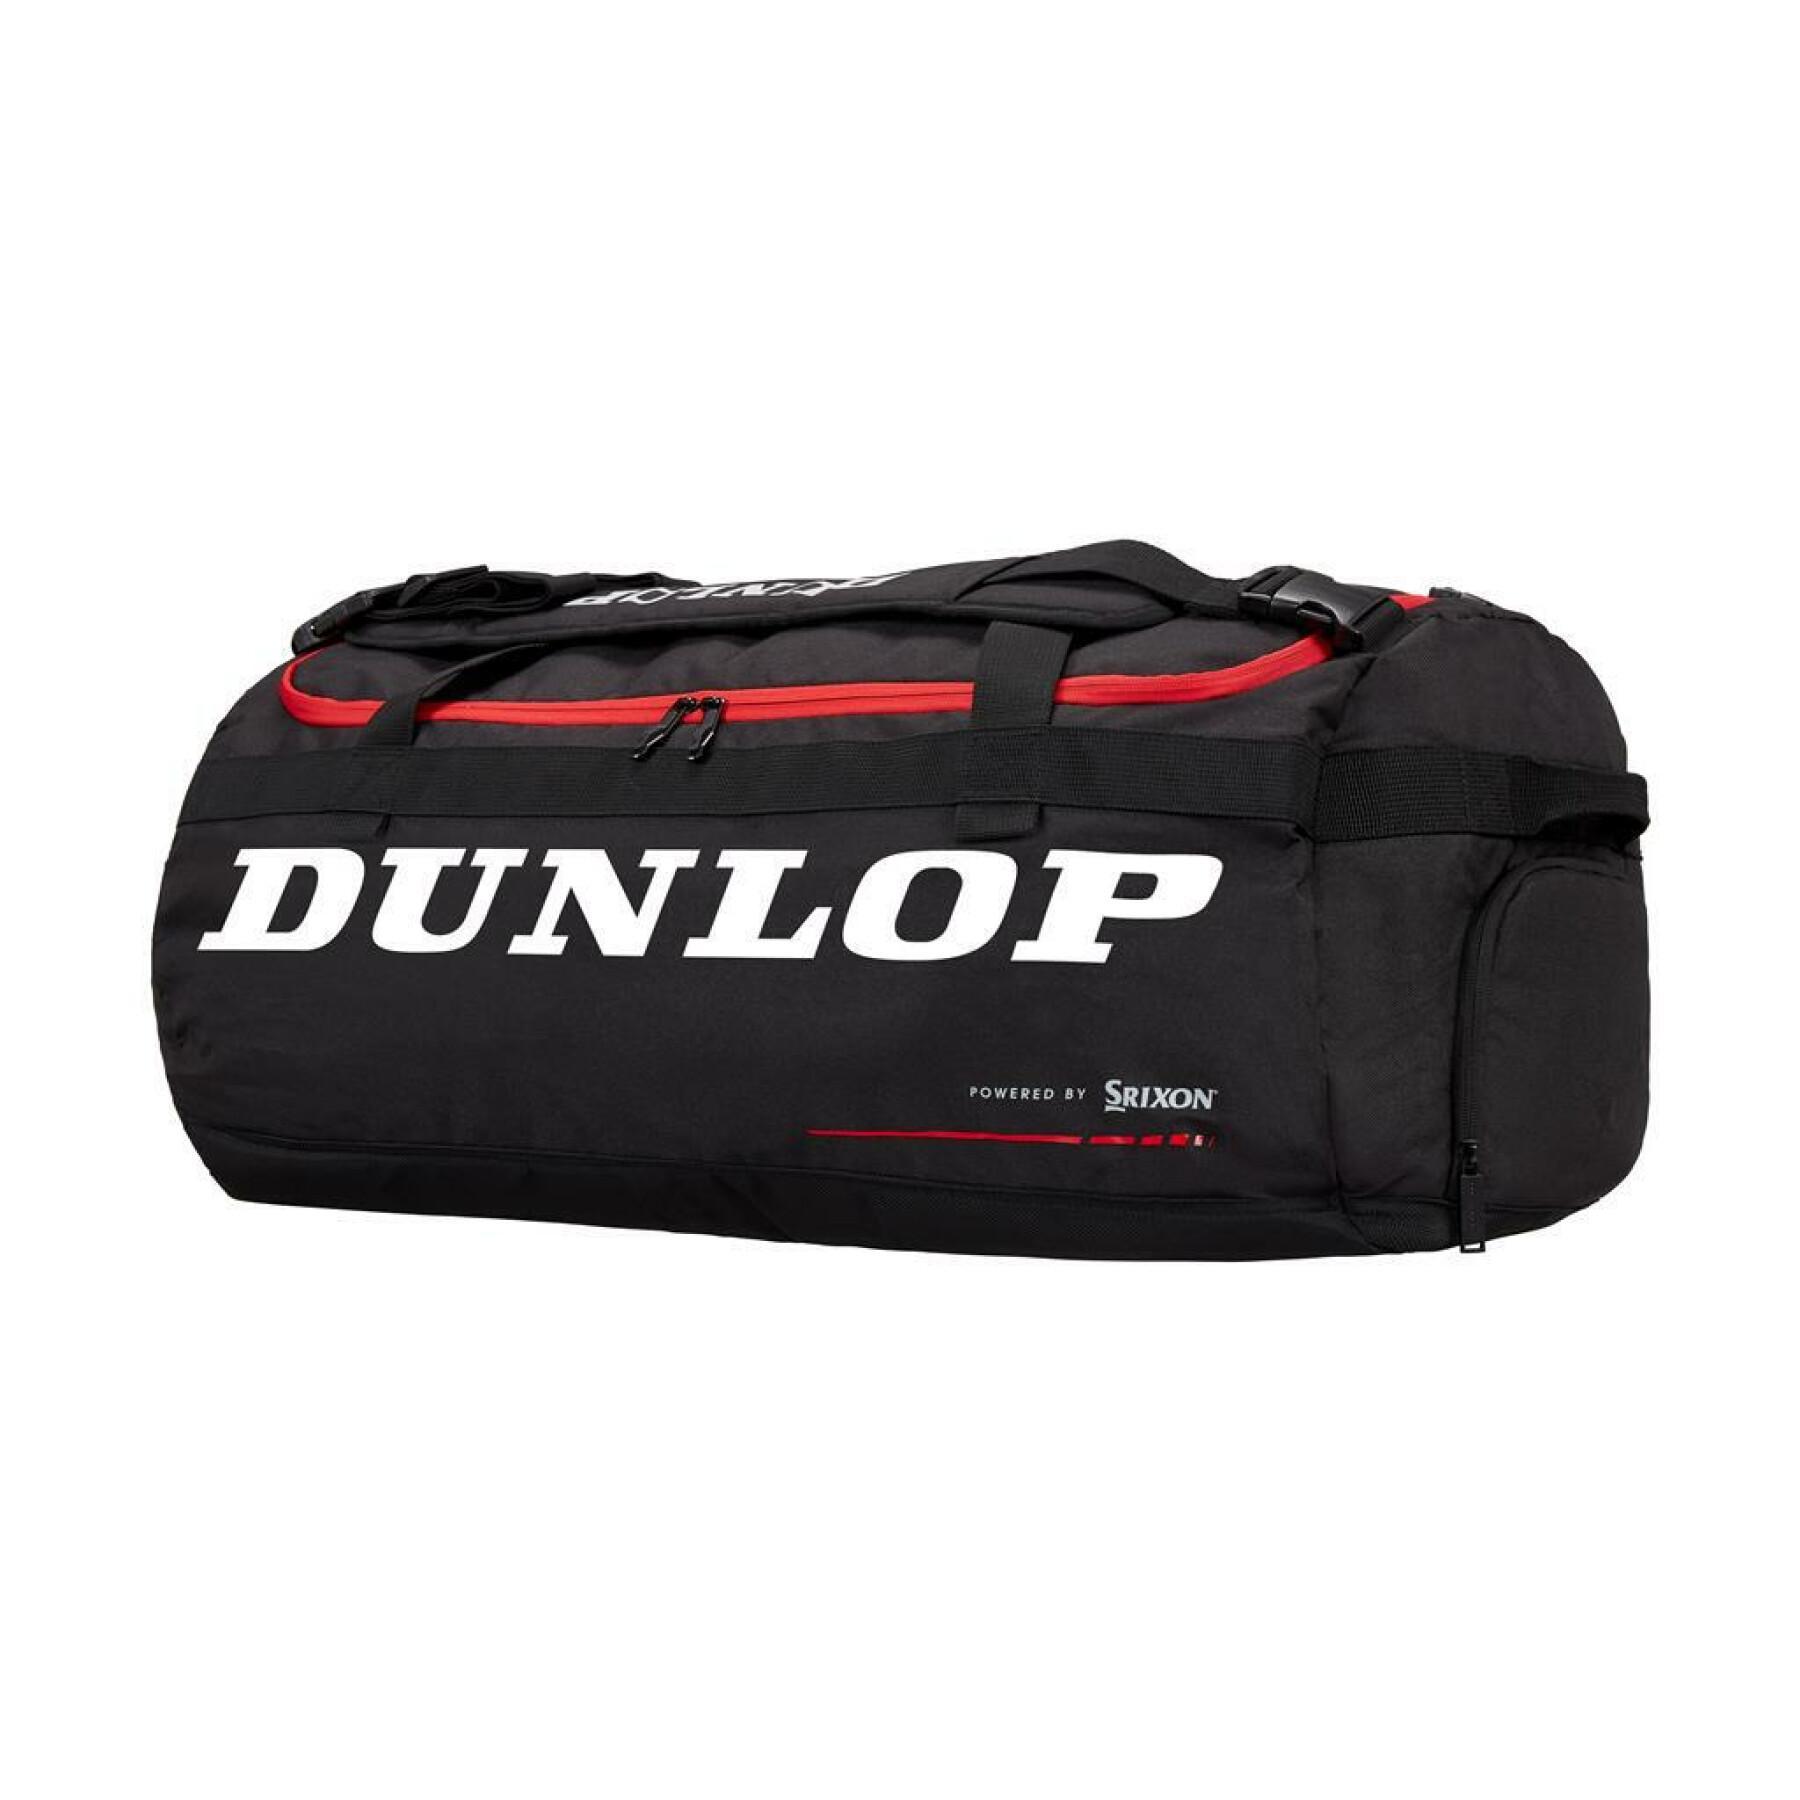 Borsa per racchette Dunlop cx performance